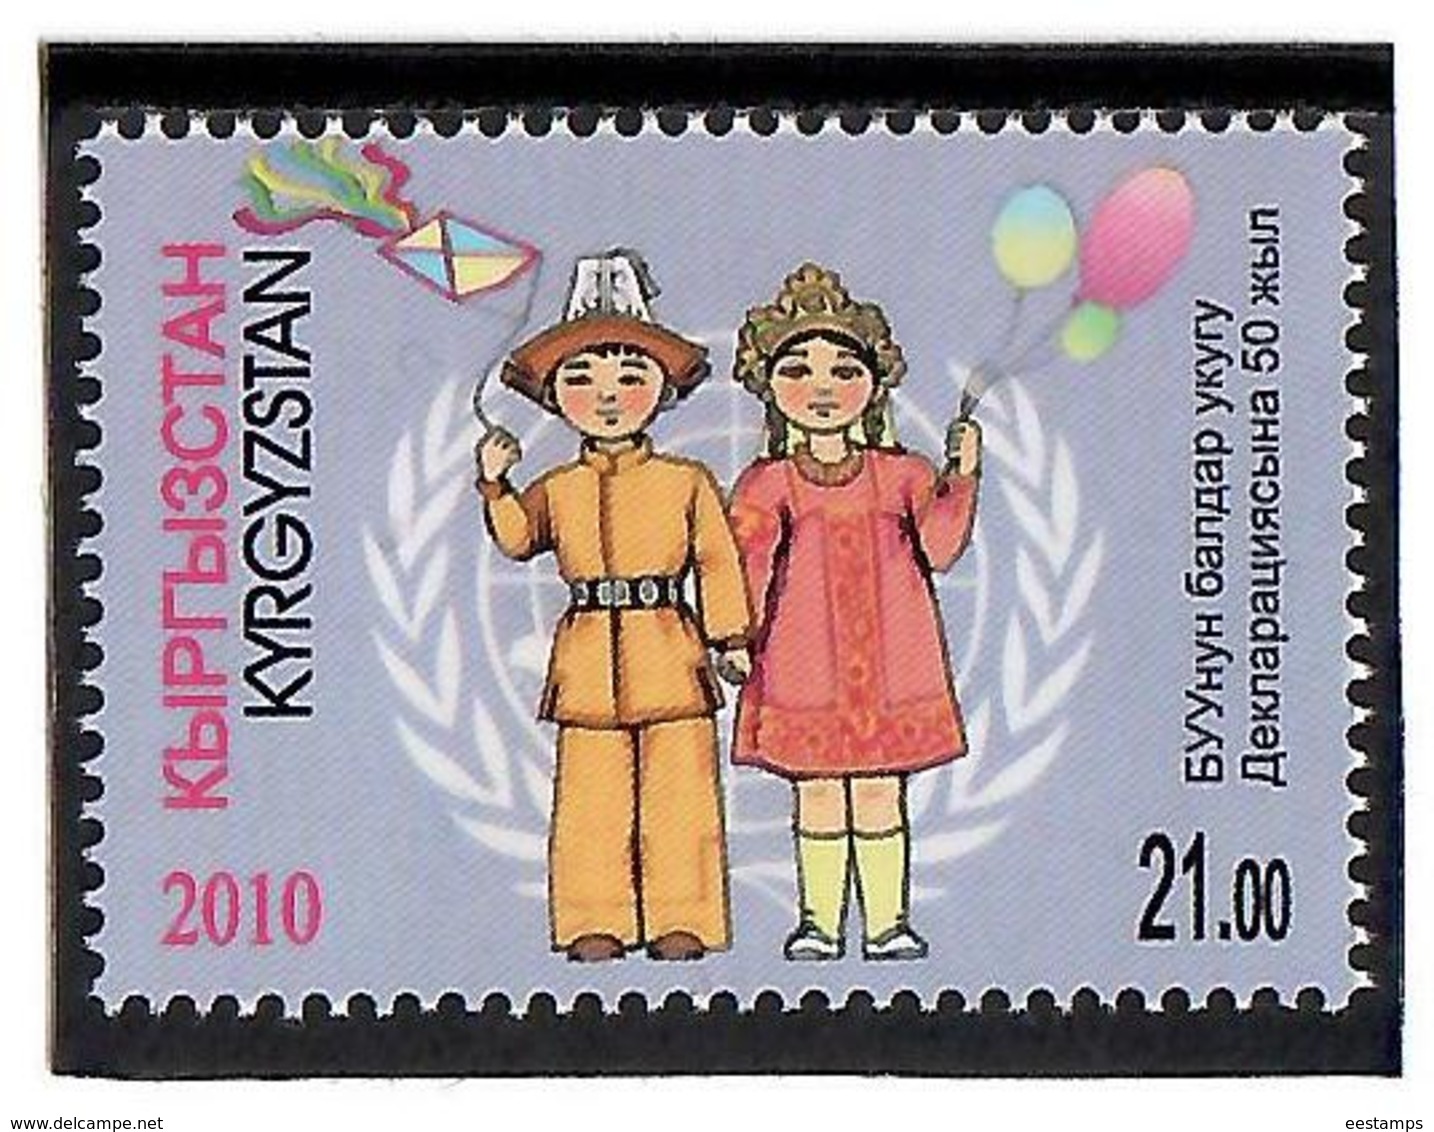 Kyrgyzstan.2010 Child's Rights. 1v: 21.oo   Michel # 607 - Kirgisistan